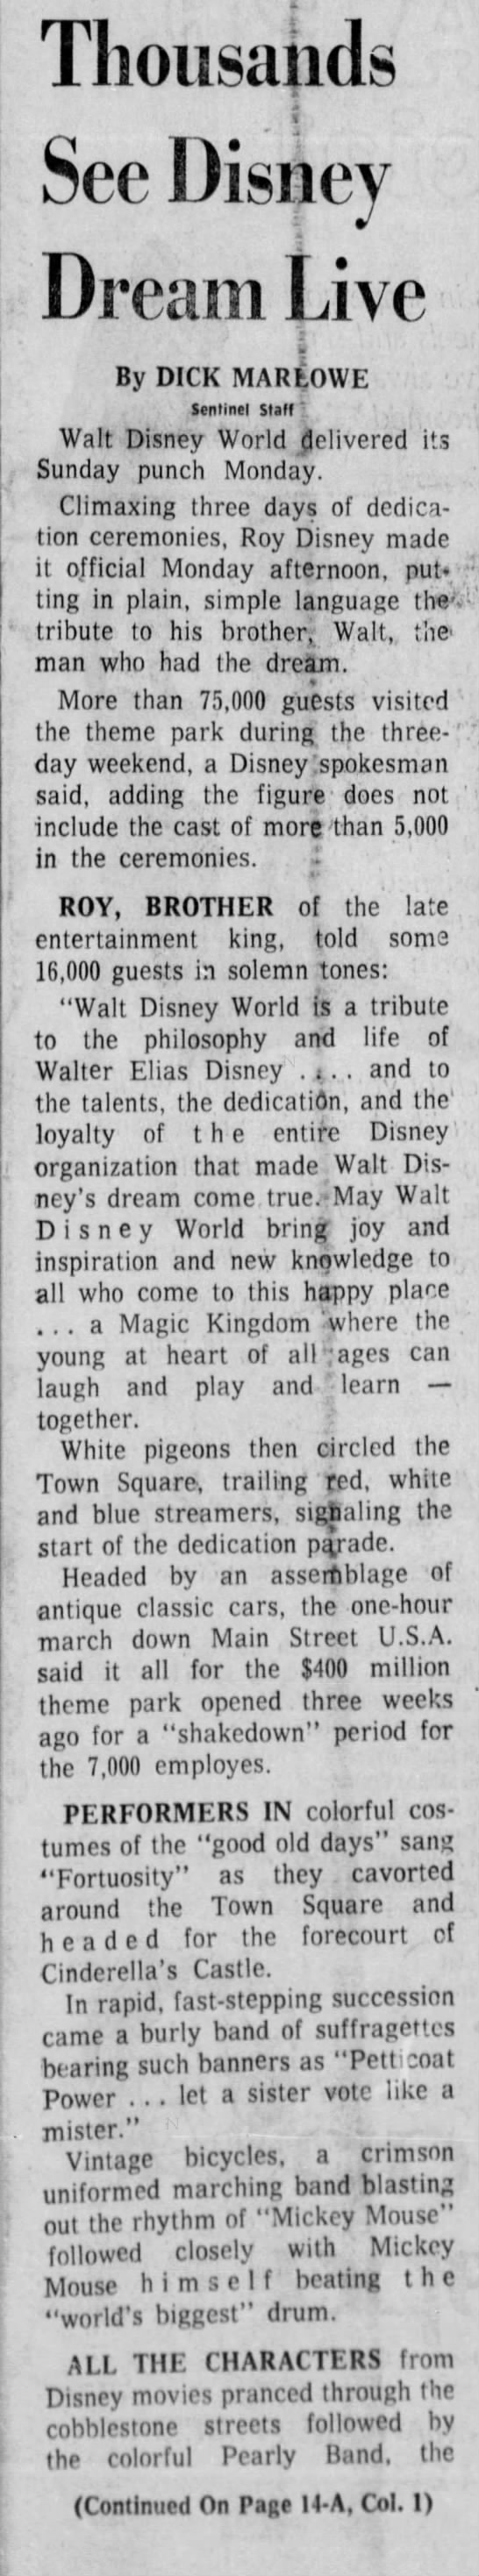 Description of Walt Disney World Grand Opening dedication ceremonies - 